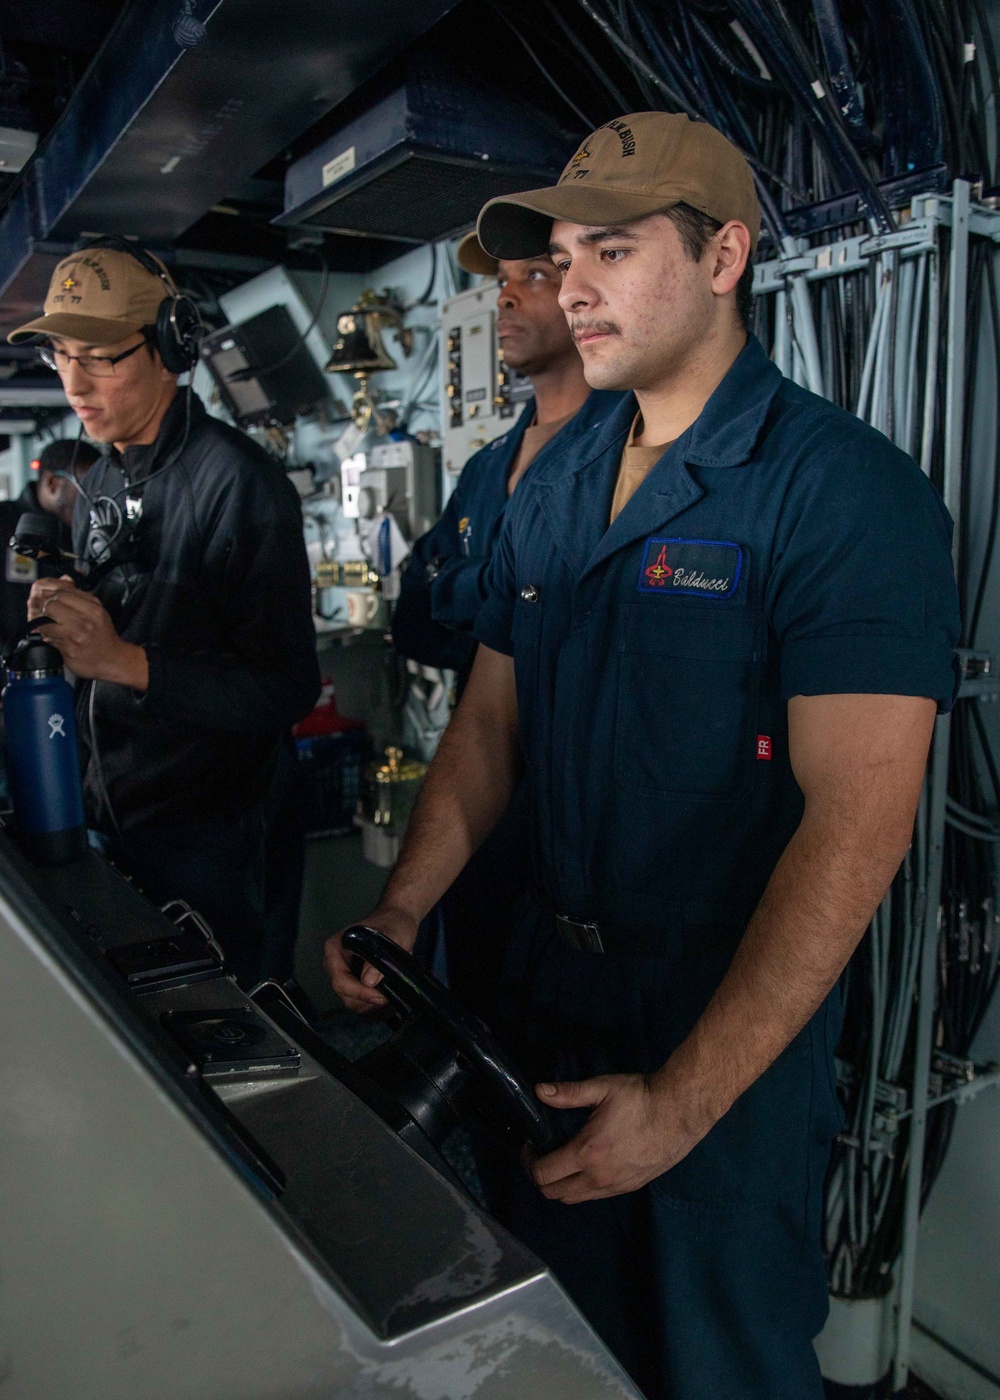 Daily operations aboard USS George H.W. Bush (CVN 77)